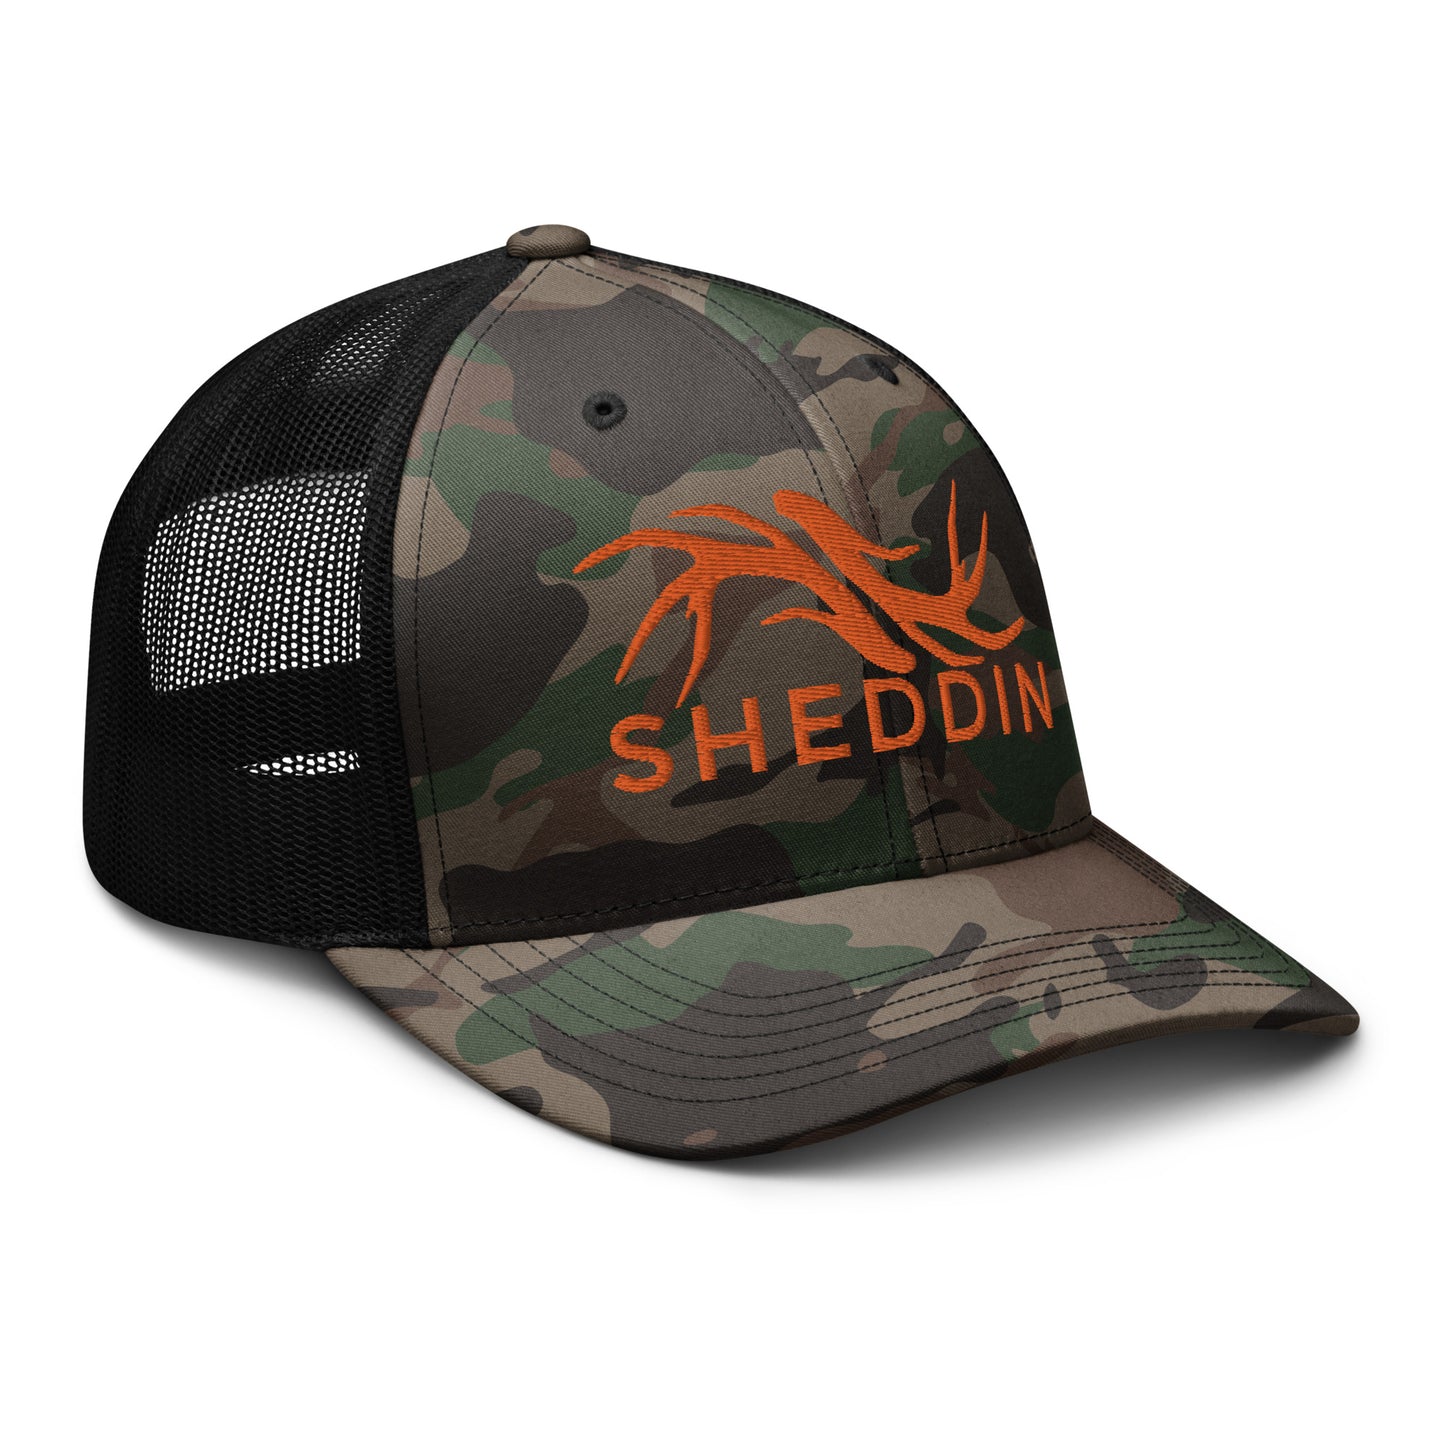 SHEDDIN Camouflage trucker hat